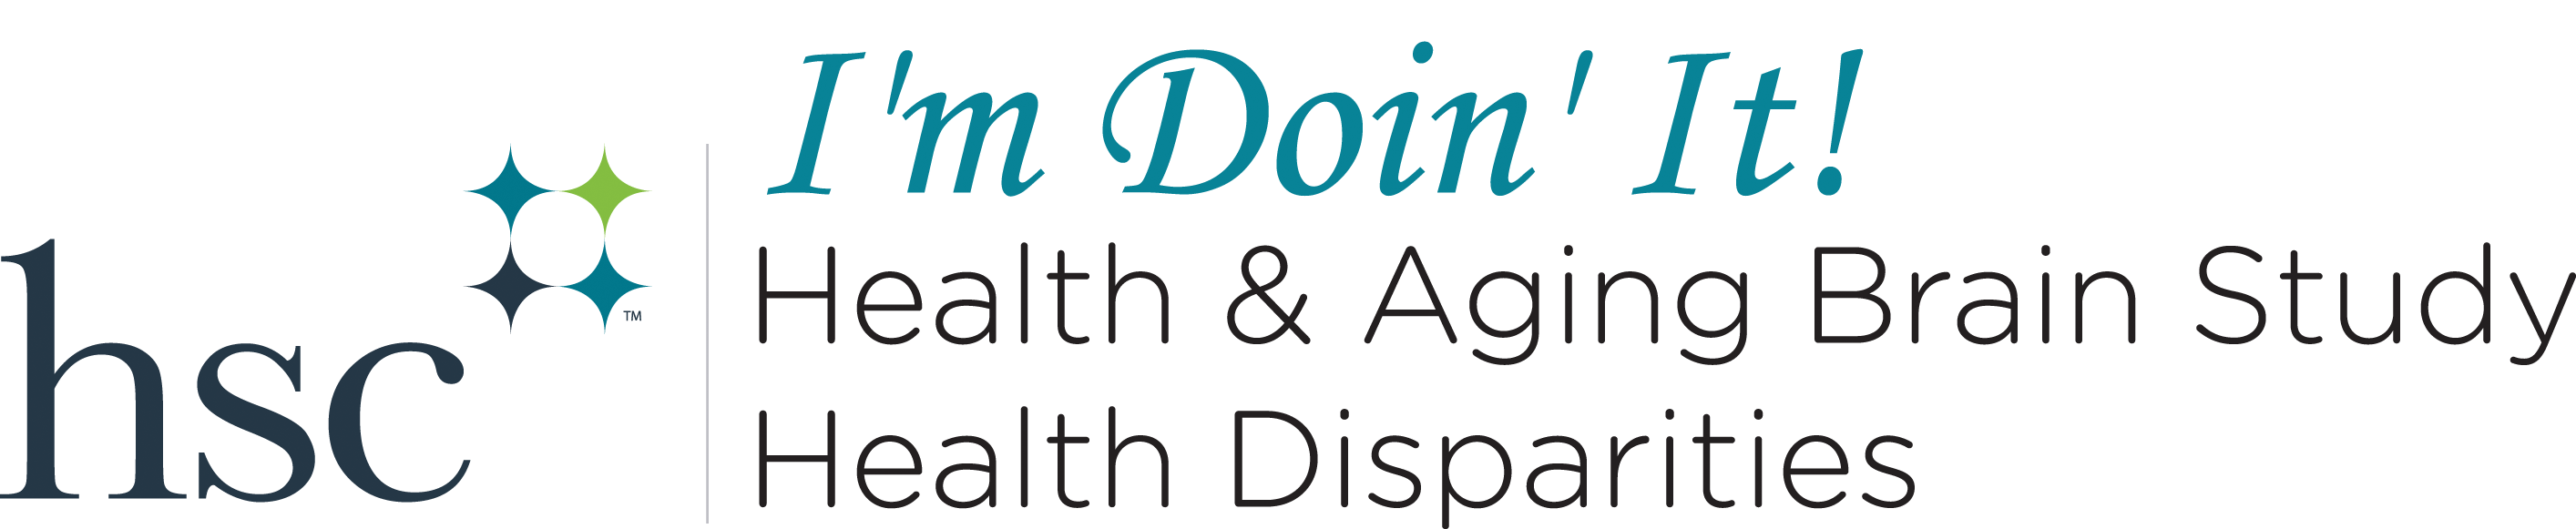 HSC Health and Aging Brain Study Health Disparities I'm Doing It Logo